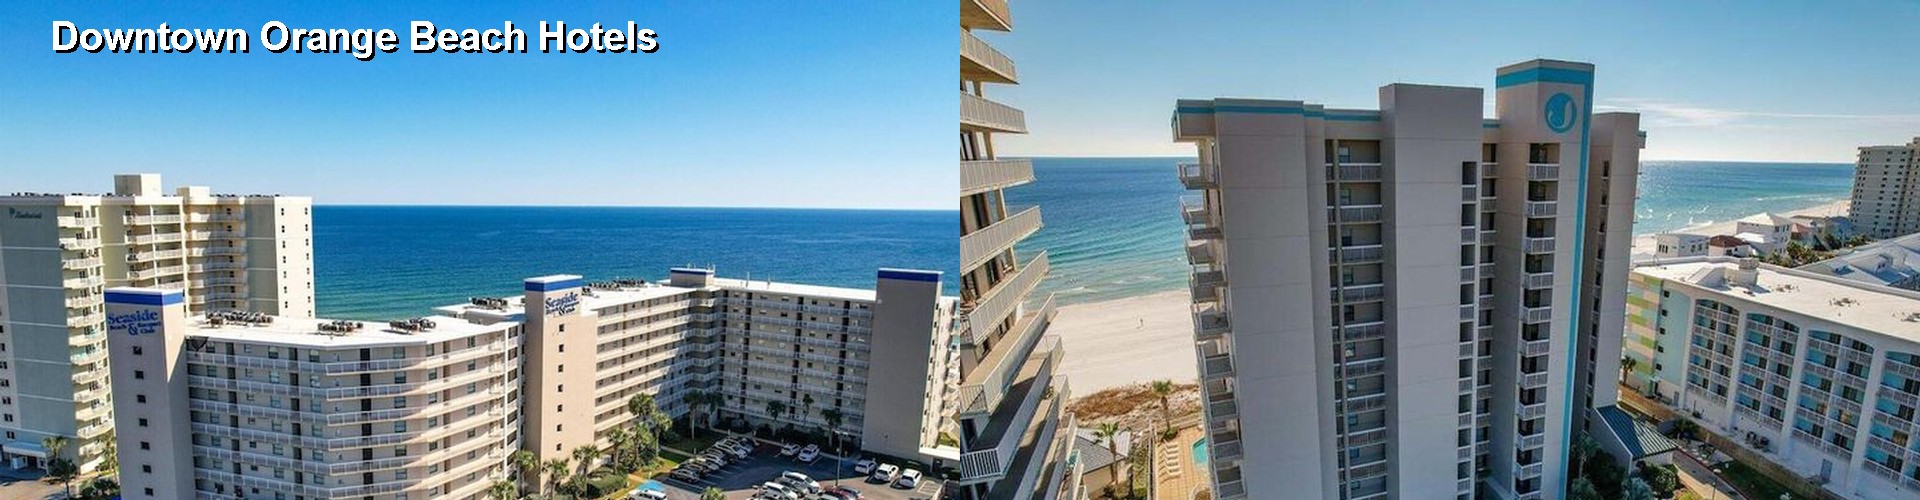 5 Best Hotels near Downtown Orange Beach